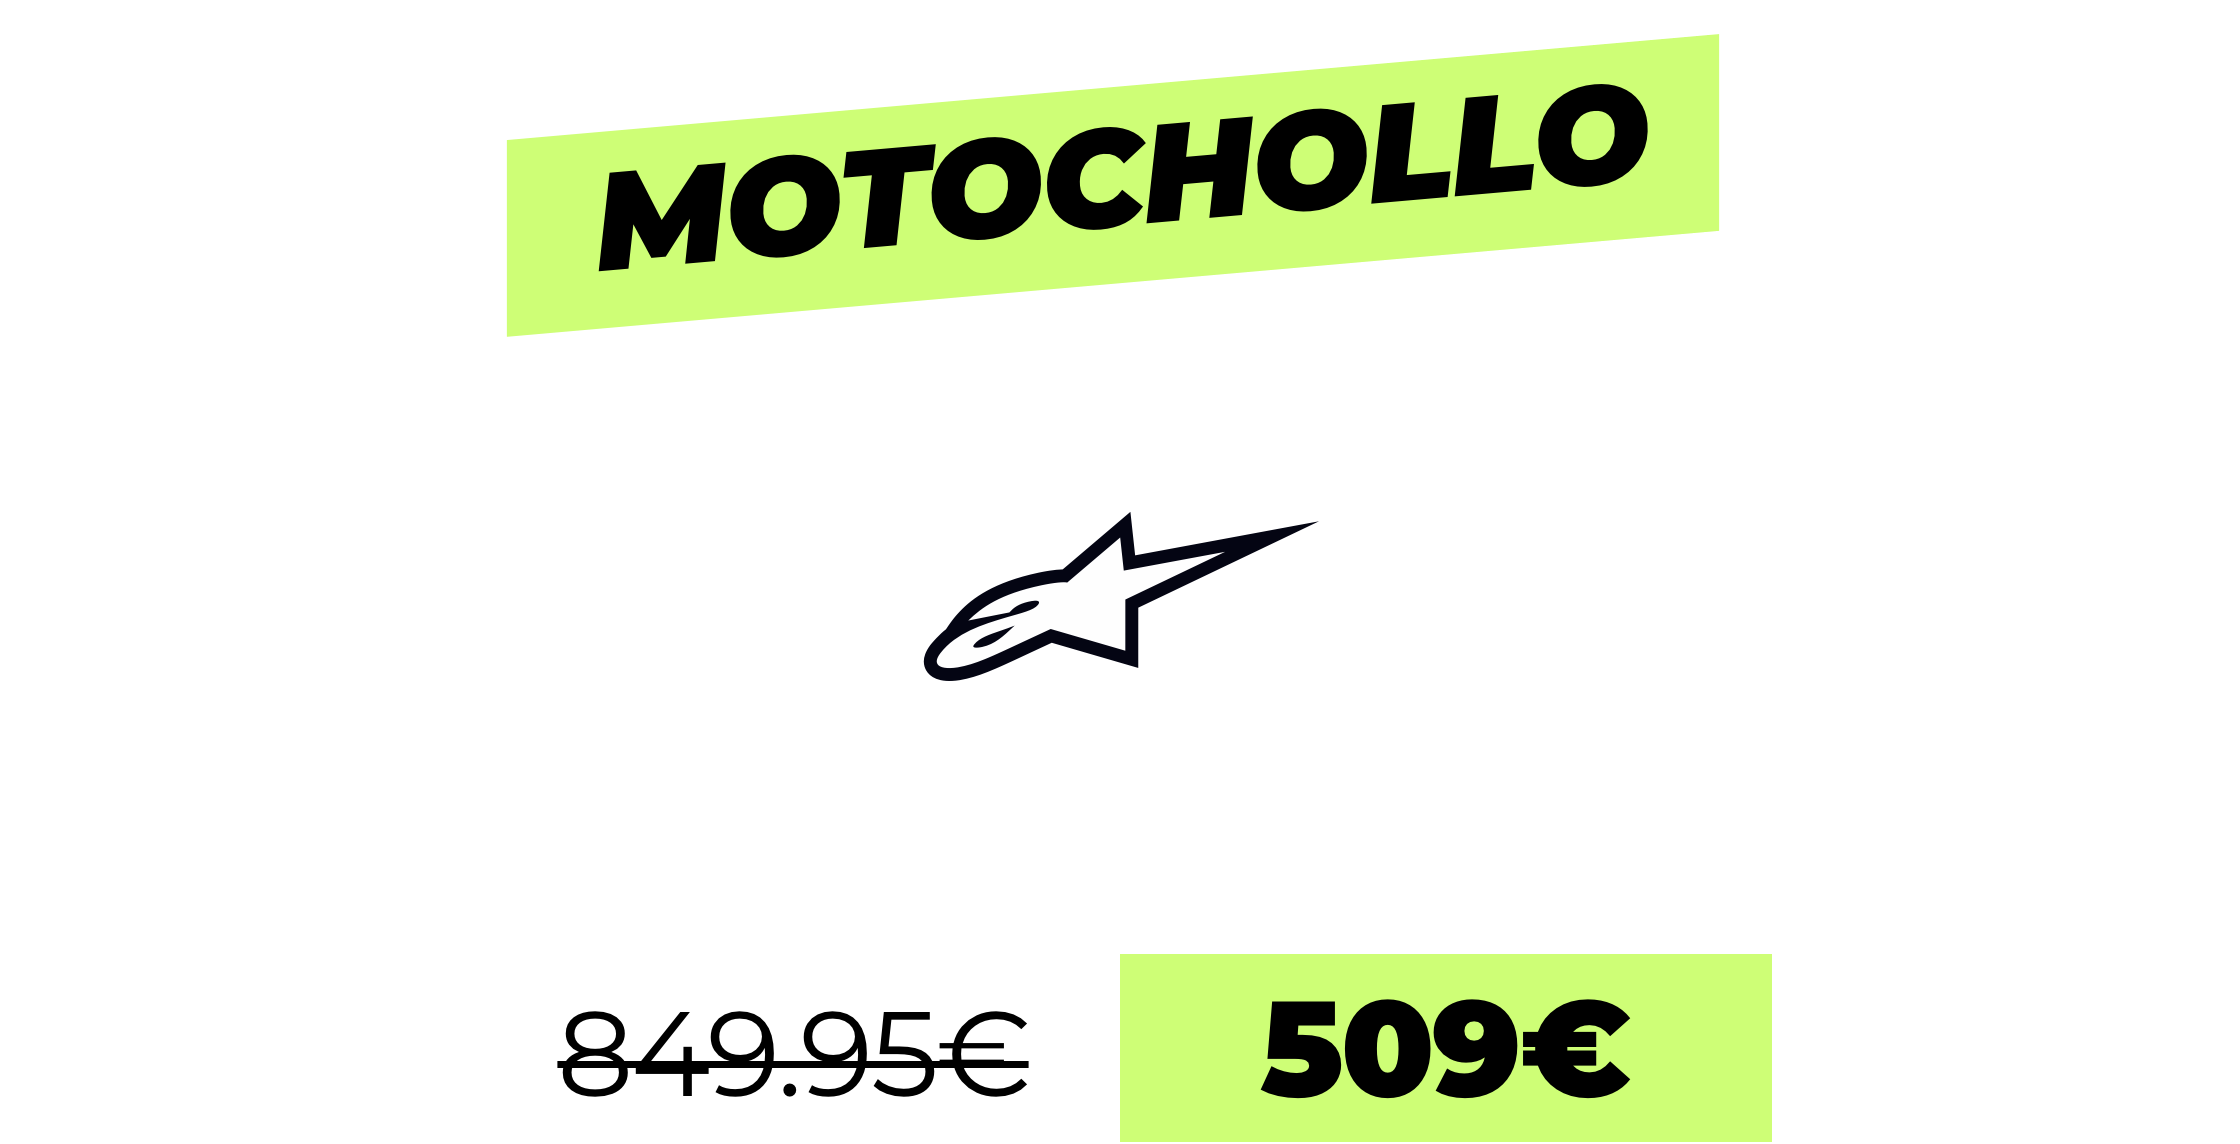 Motocard - Get Flat 40% off